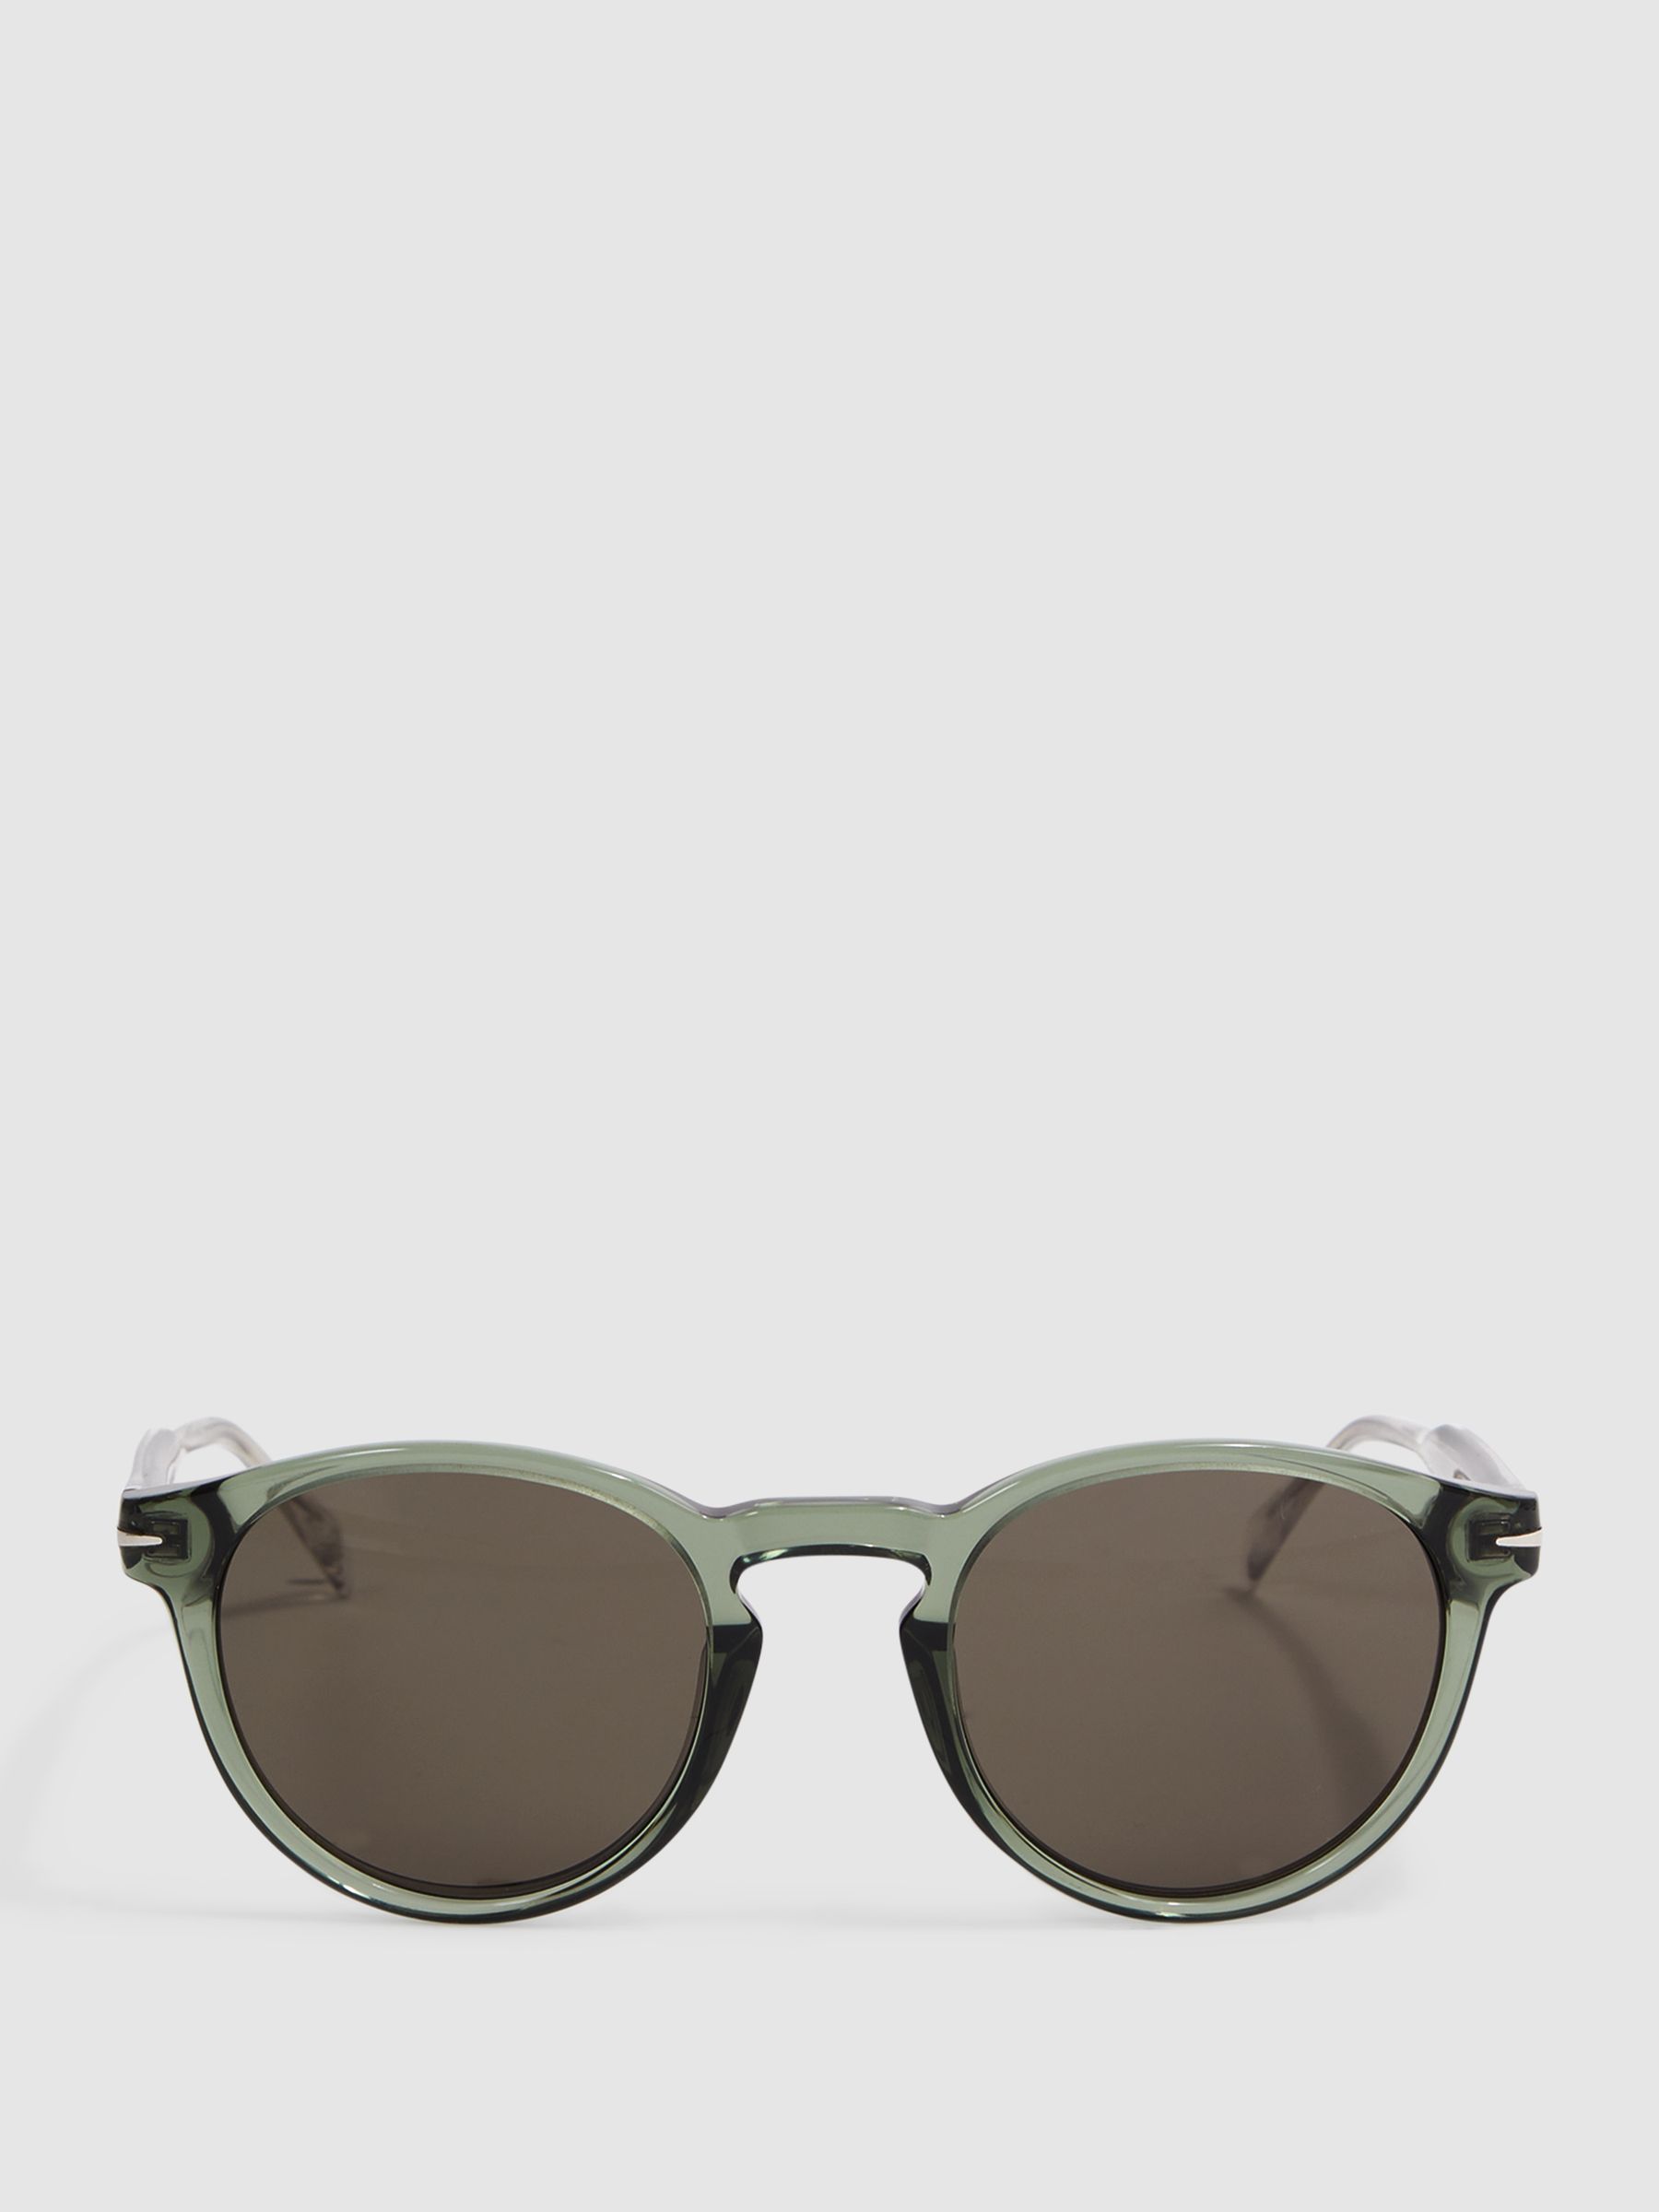 Eyewear by David Beckham Rounded Sunglasses in Grey - REISS